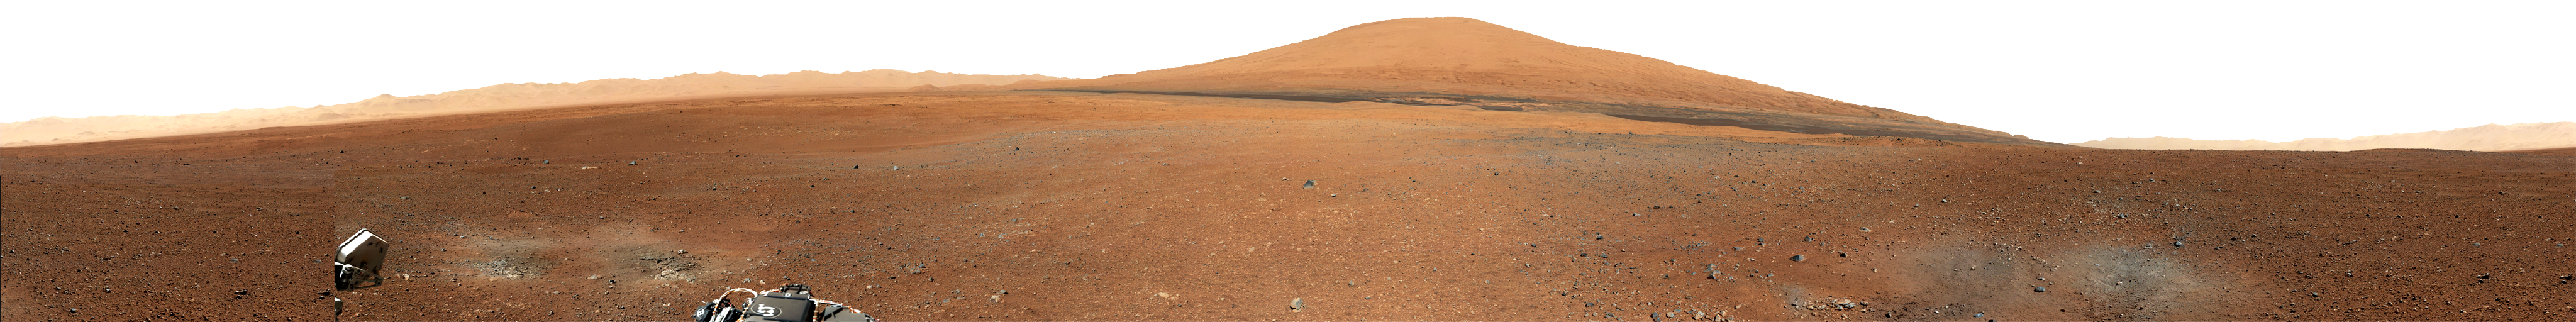 MSL Curiosity at Bradbury landing site in Gale Crater